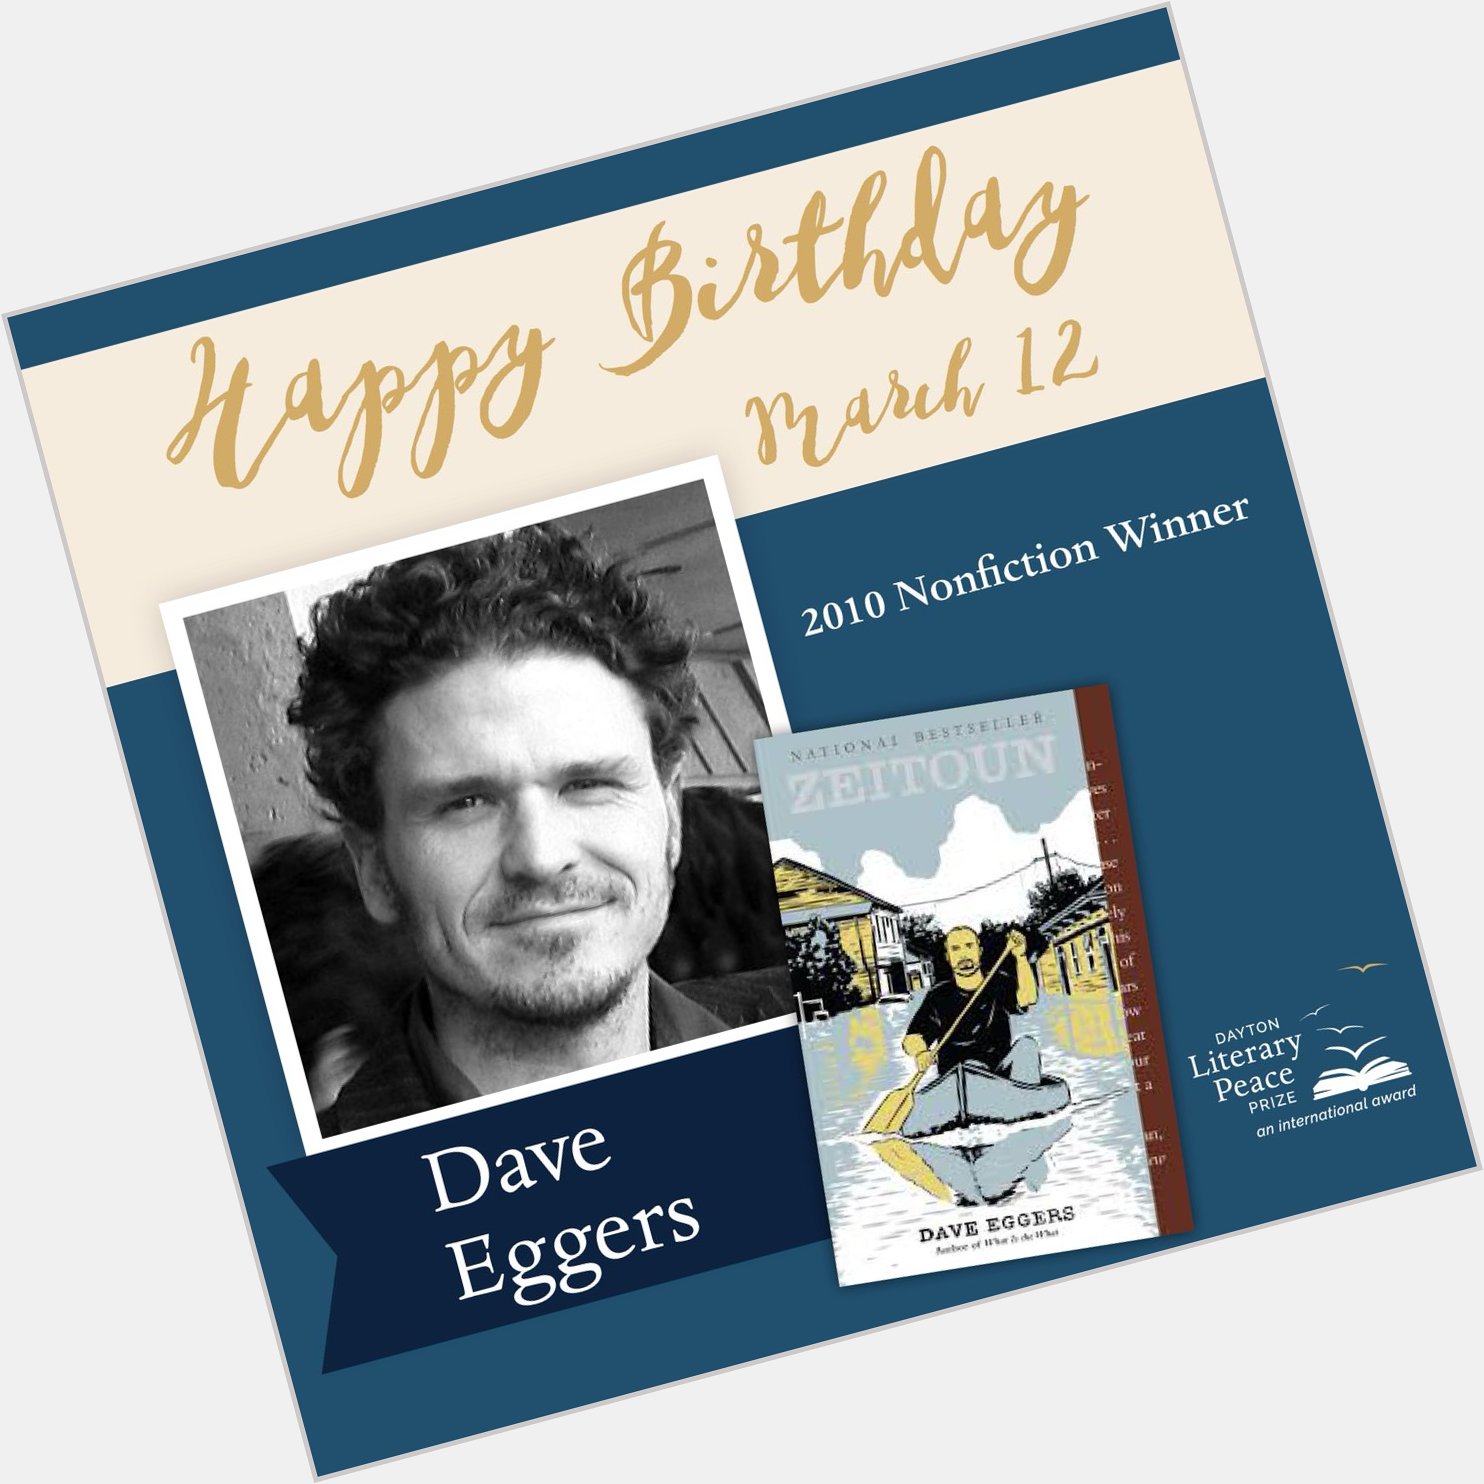 Happy birthday to 2010 Nonfiction Winner Dave Eggers!  